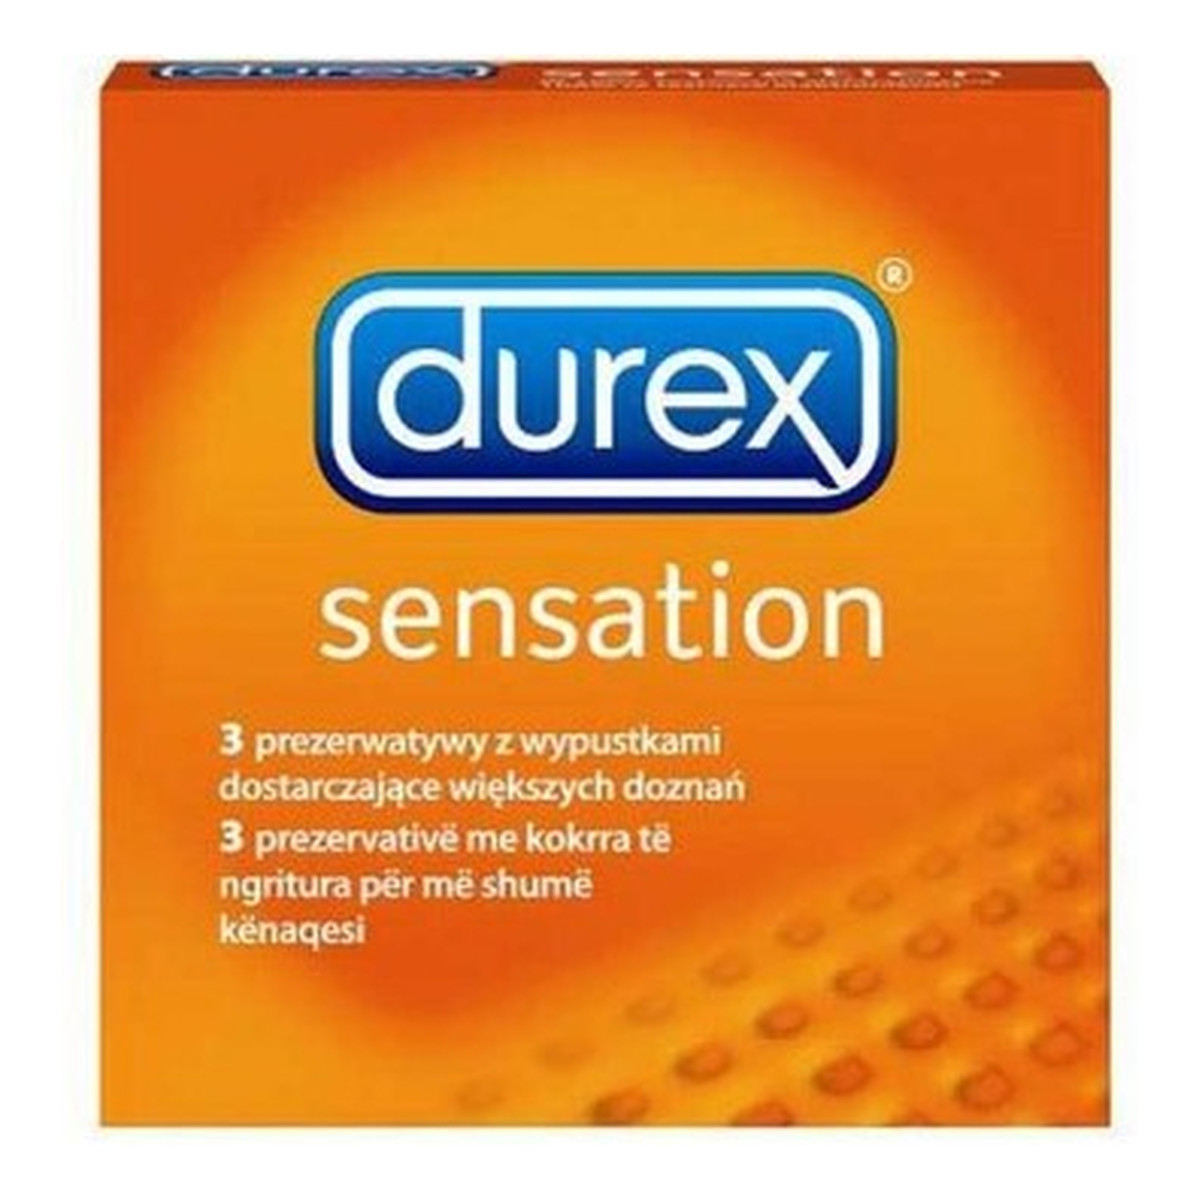 Durex Sensation Prezerwatywy 3szt.